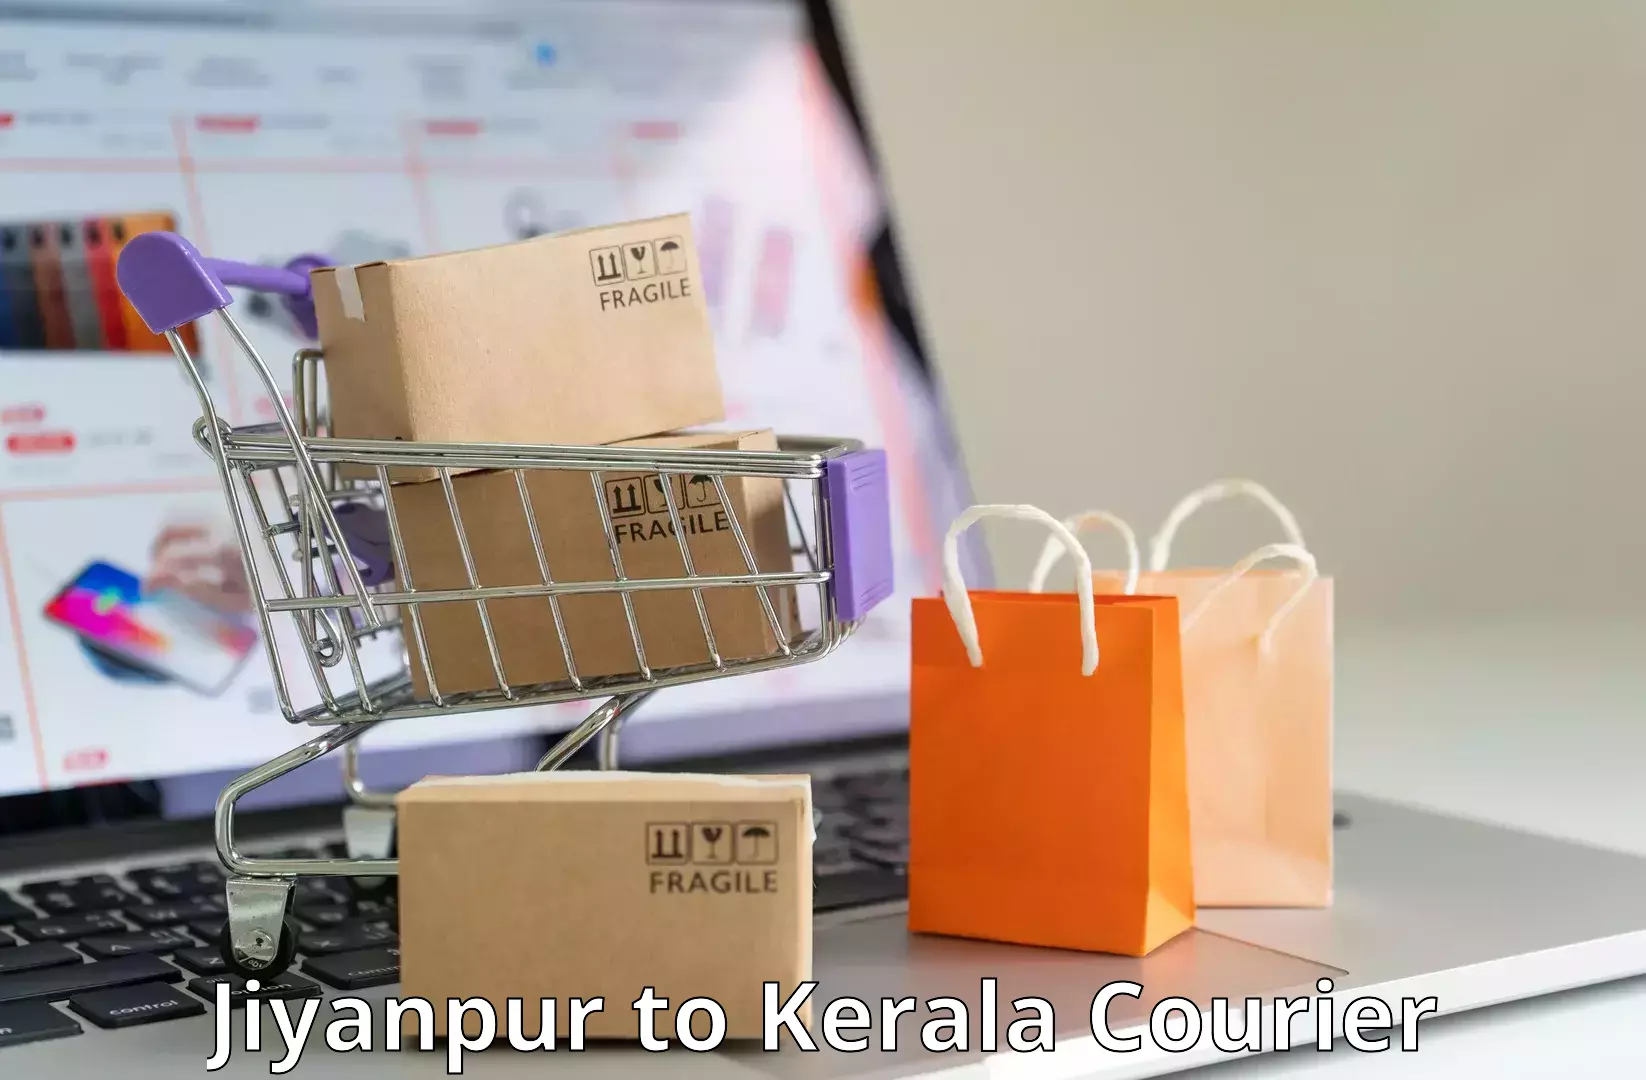 Supply chain efficiency Jiyanpur to Kerala